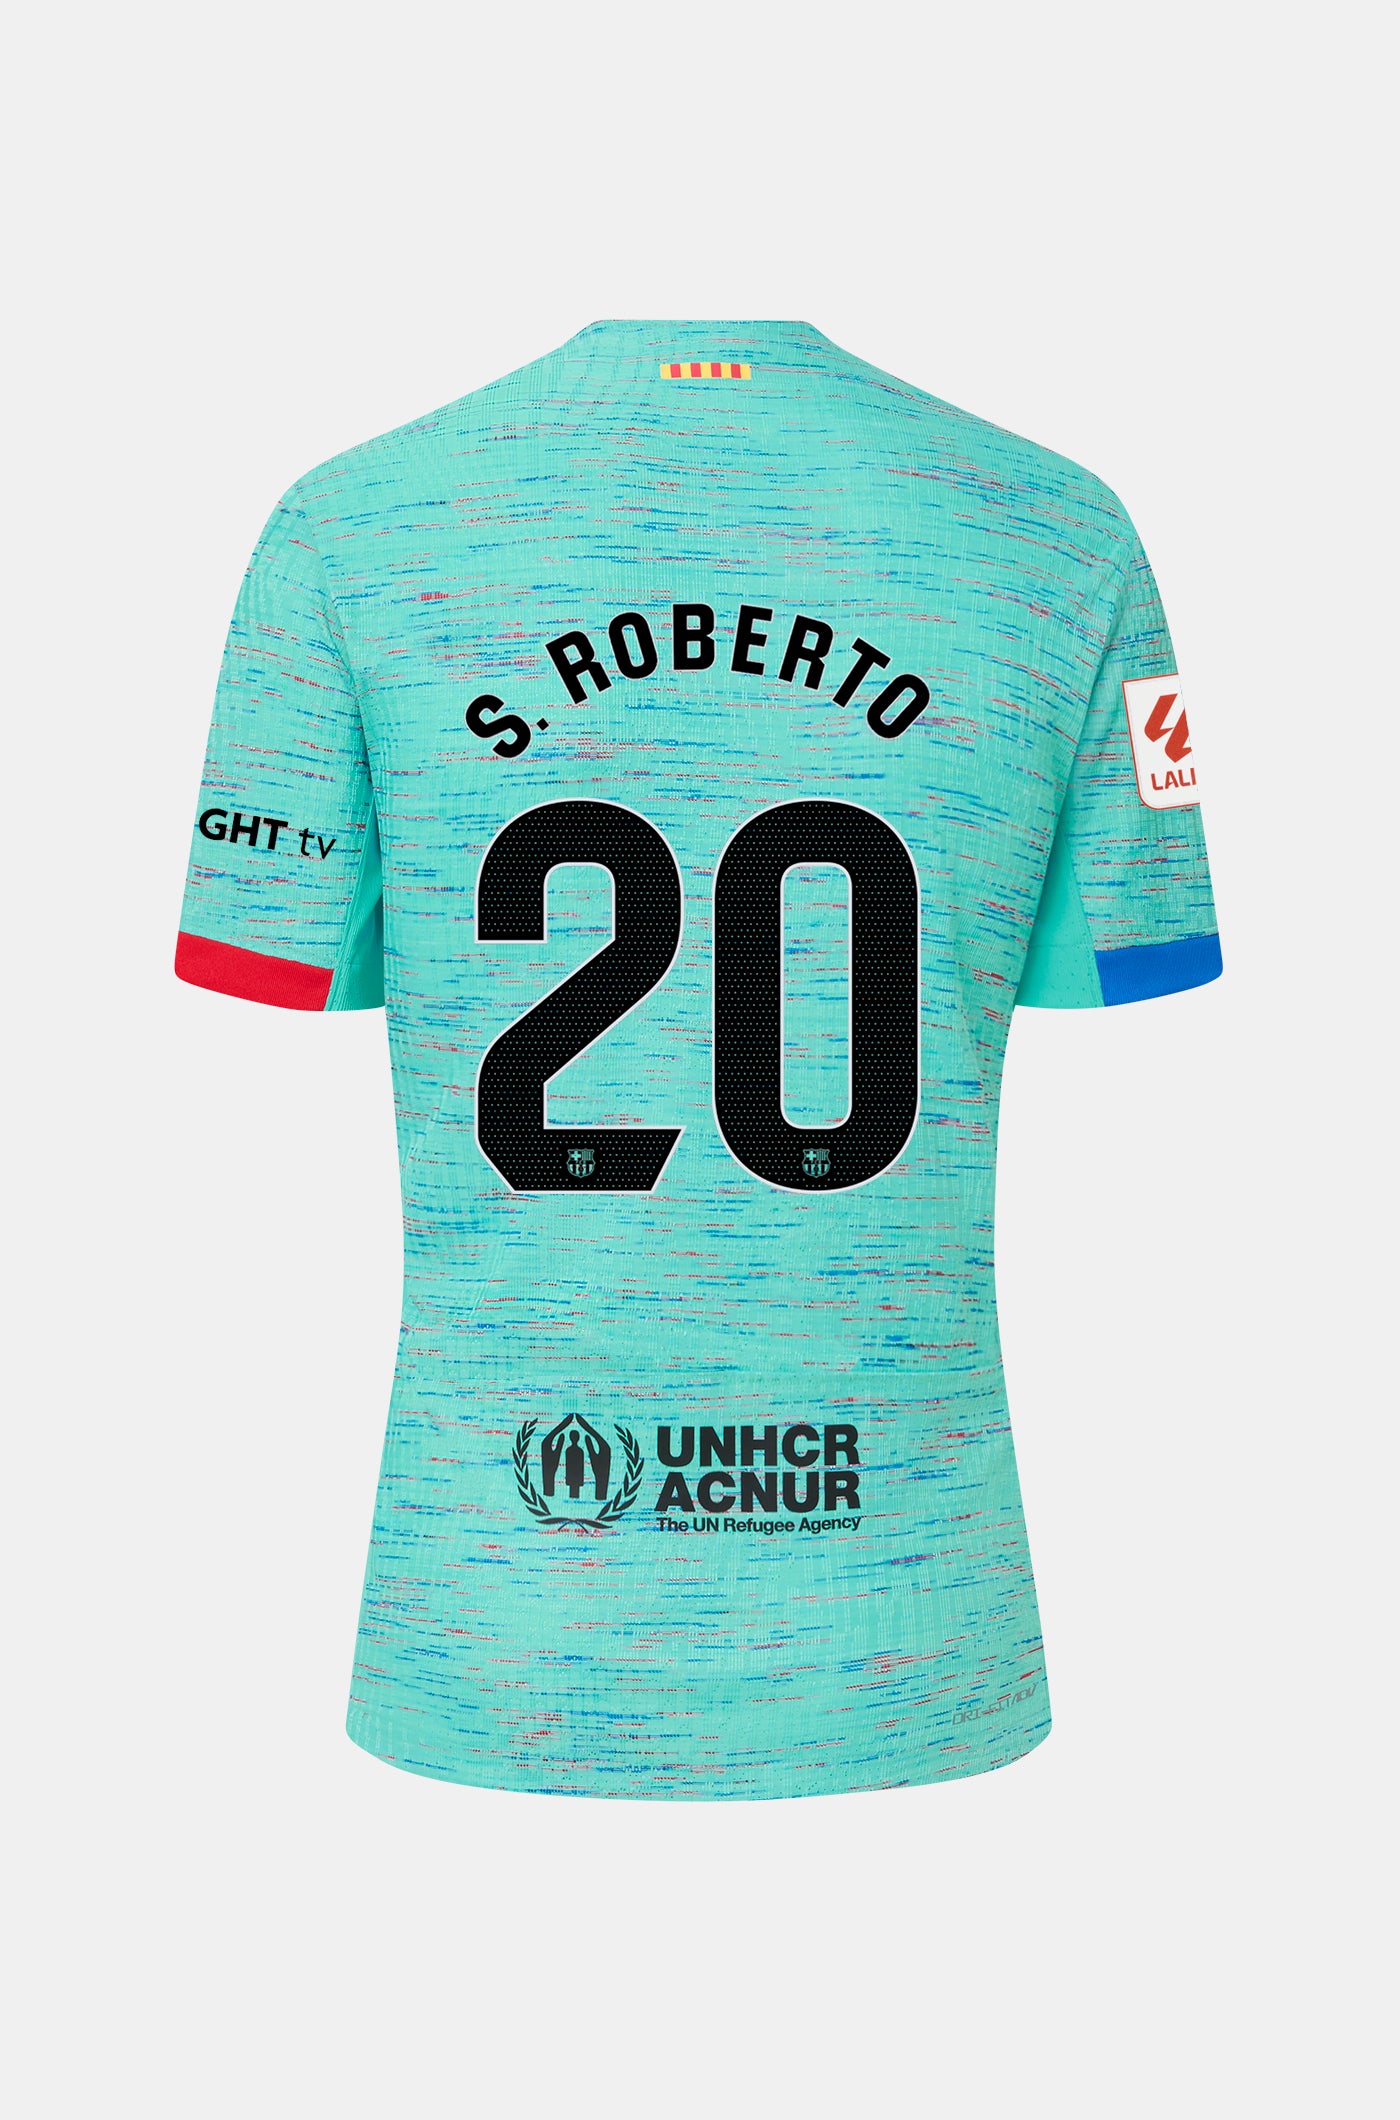 LFP FC Barcelona third shirt 23/24 Player’s Edition  - S. ROBERTO